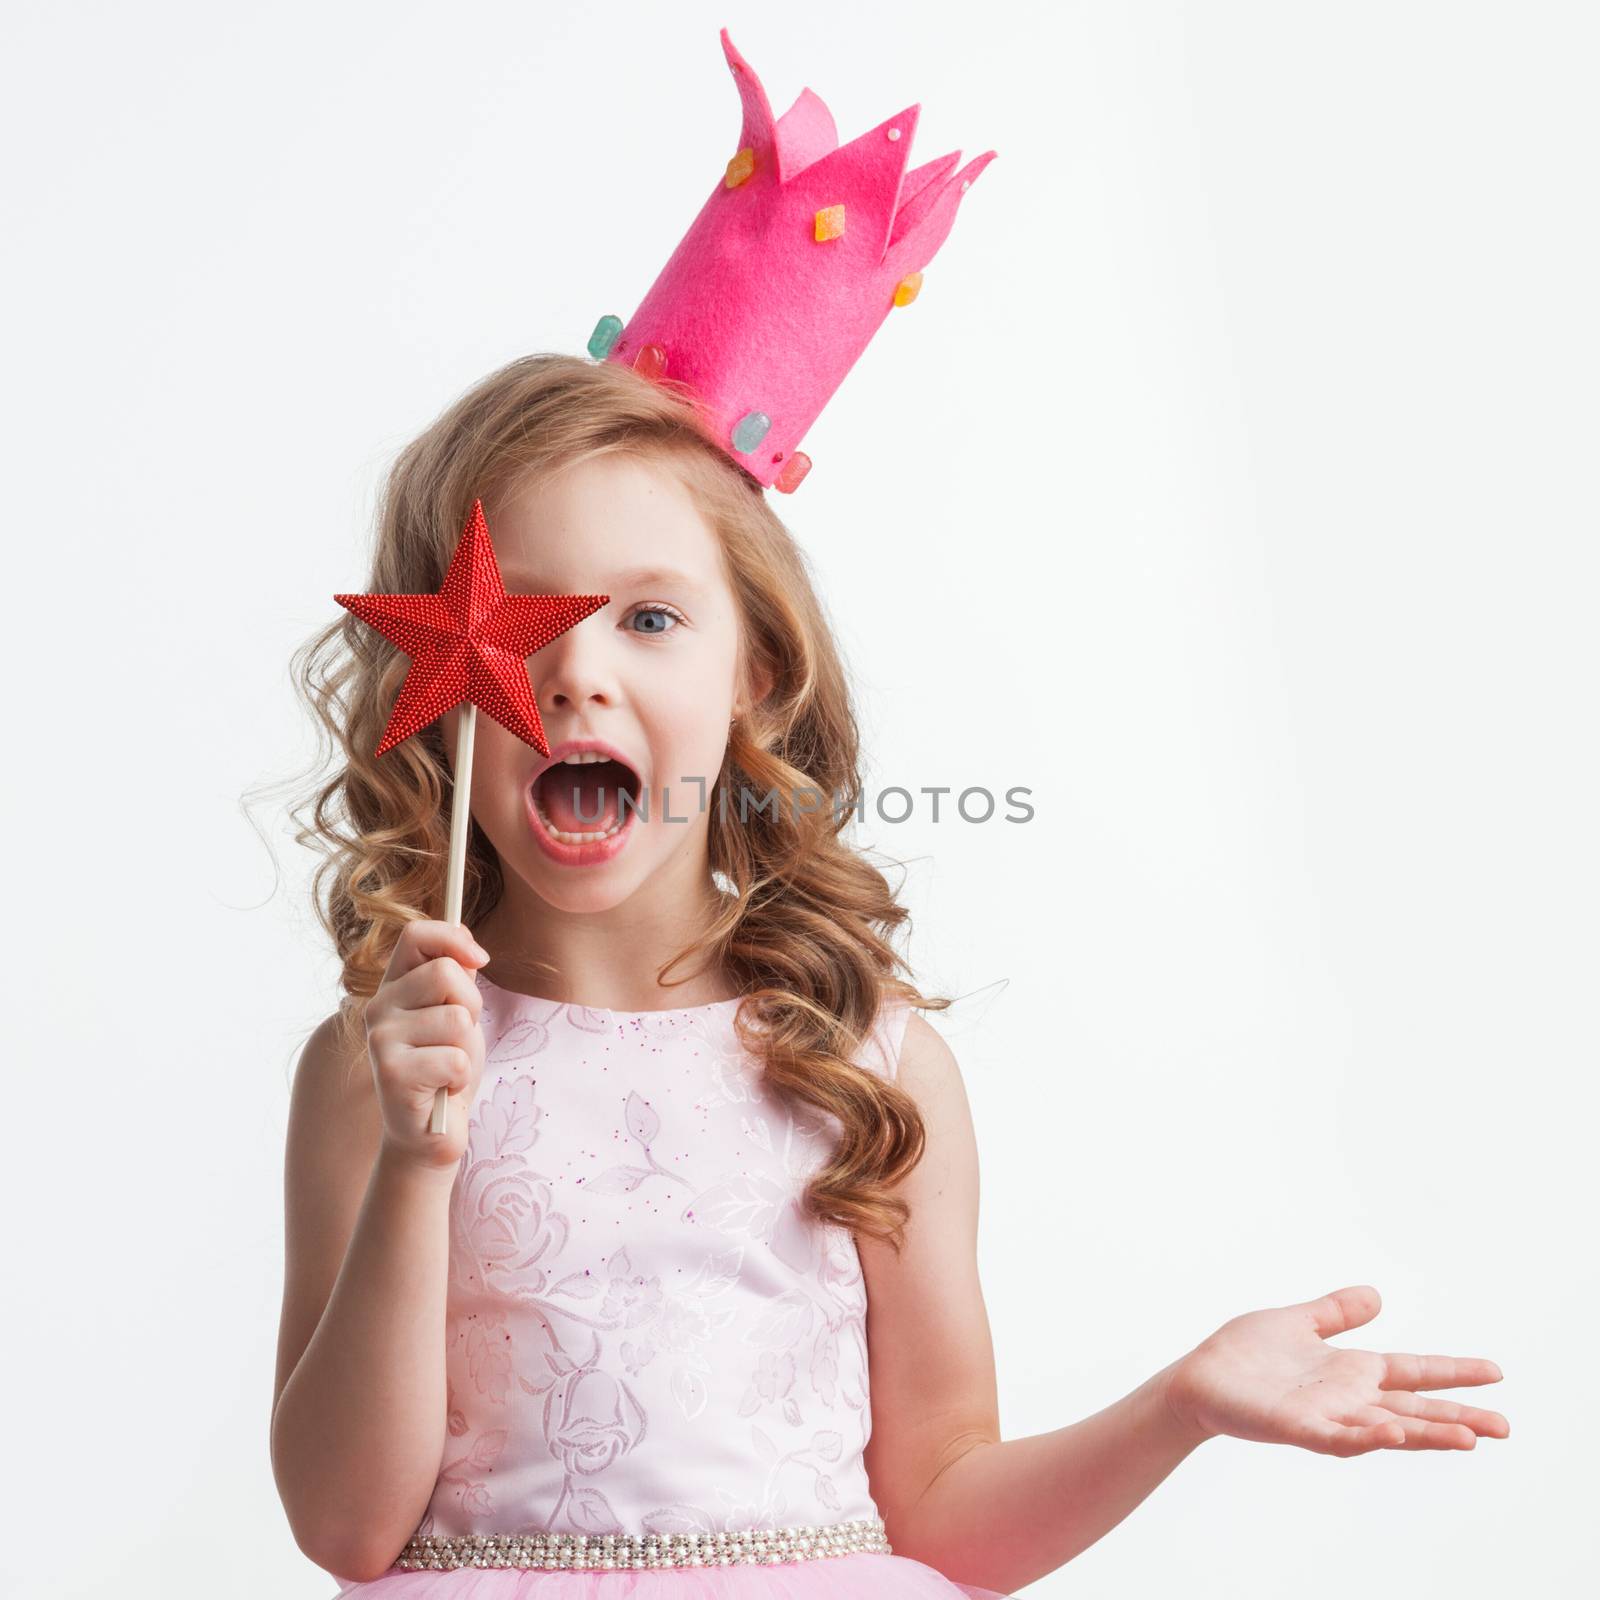 Princess girl with star magic wand by Yellowj